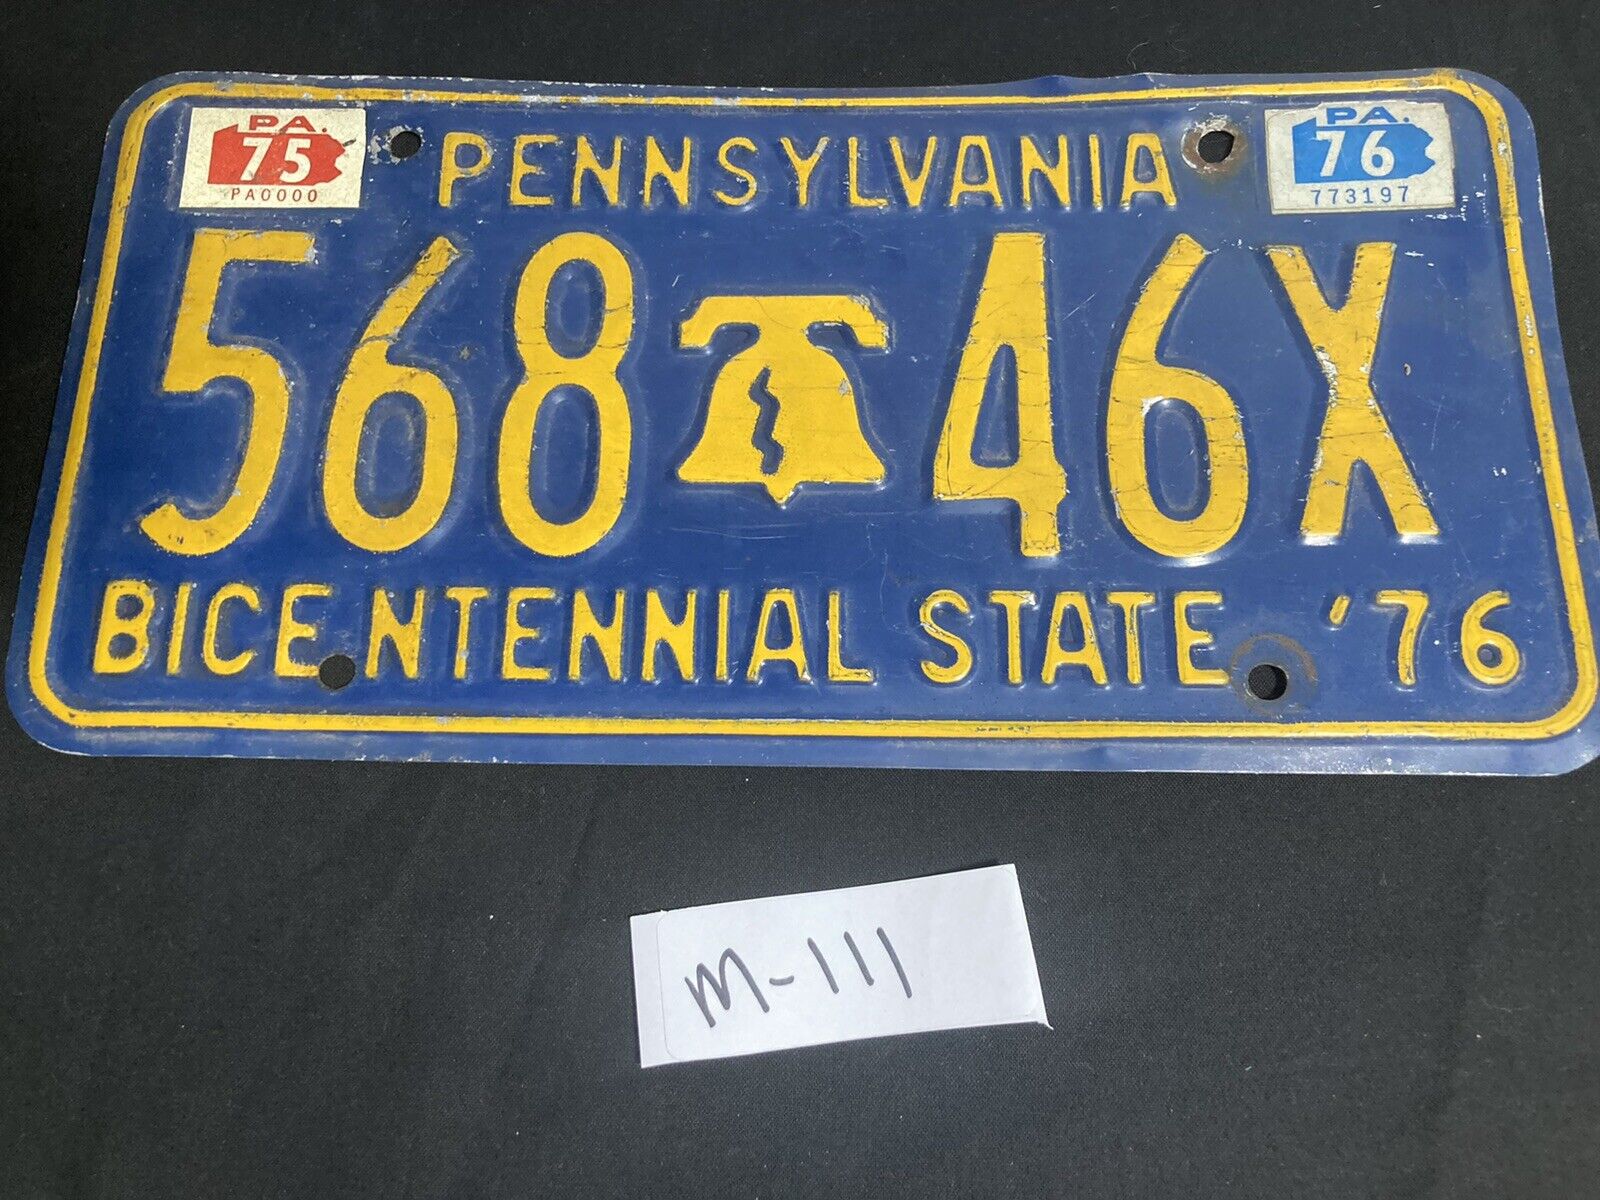 Pennsylvania 1971 BICENTENNIAL STATE License Plate #568-46X